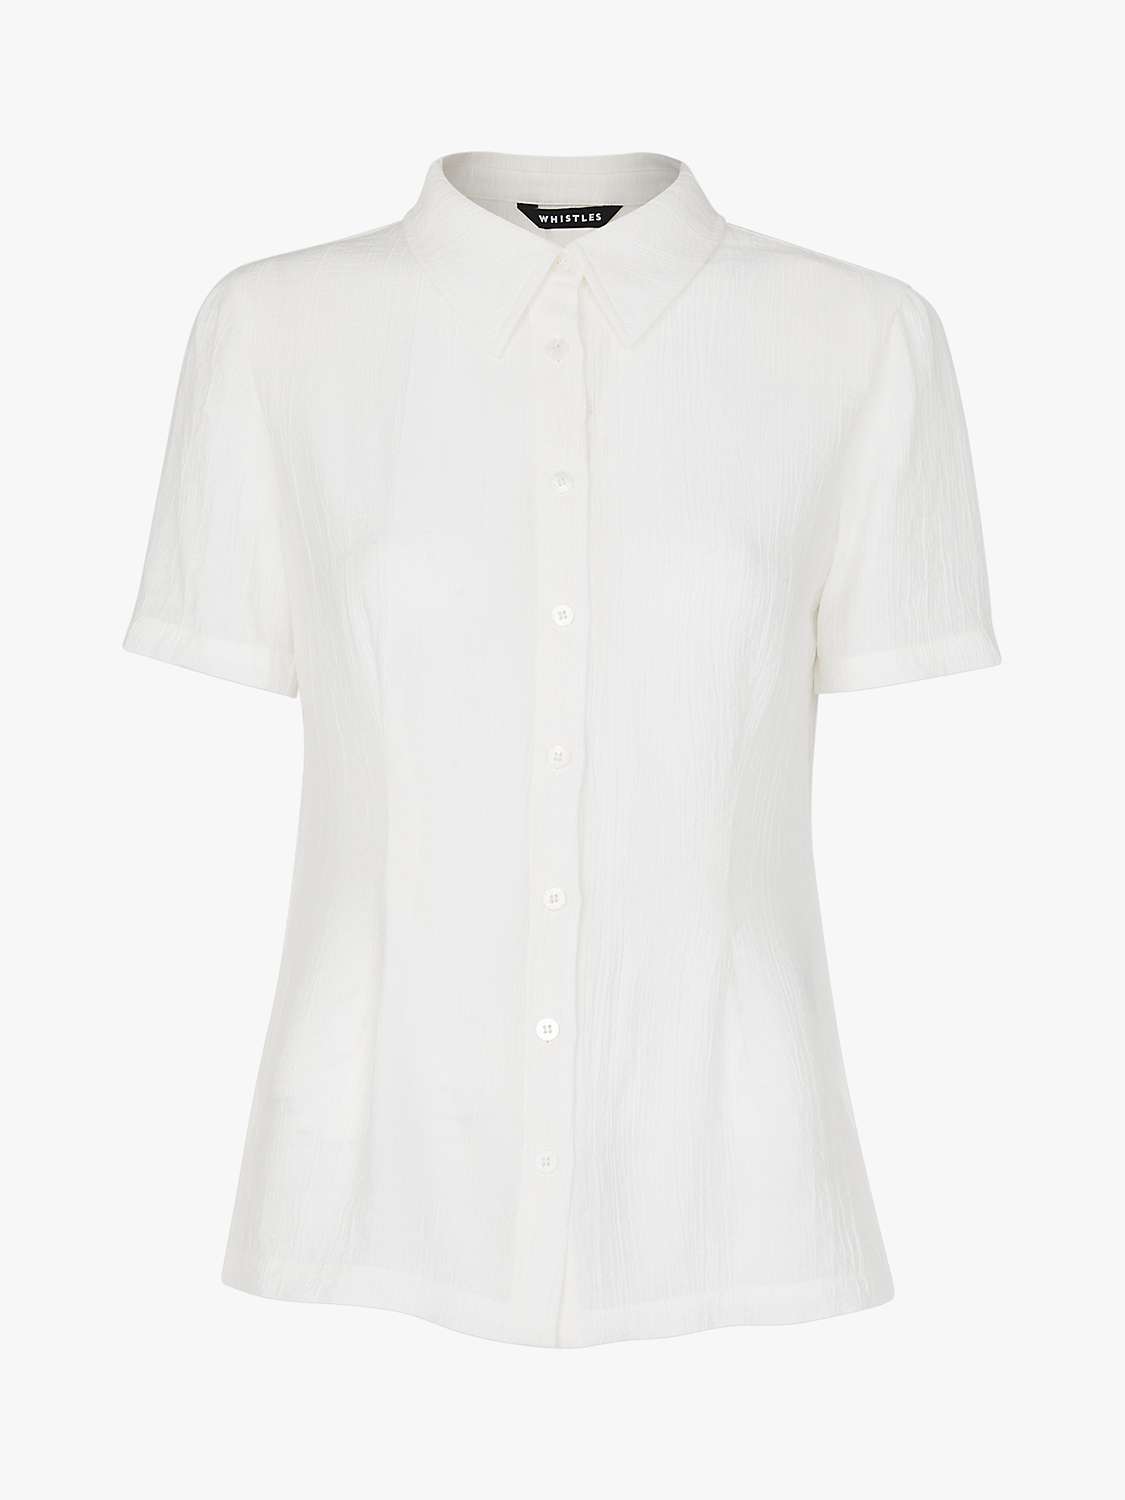 Buy Whistles Square Neck T-Shirt, White Online at johnlewis.com